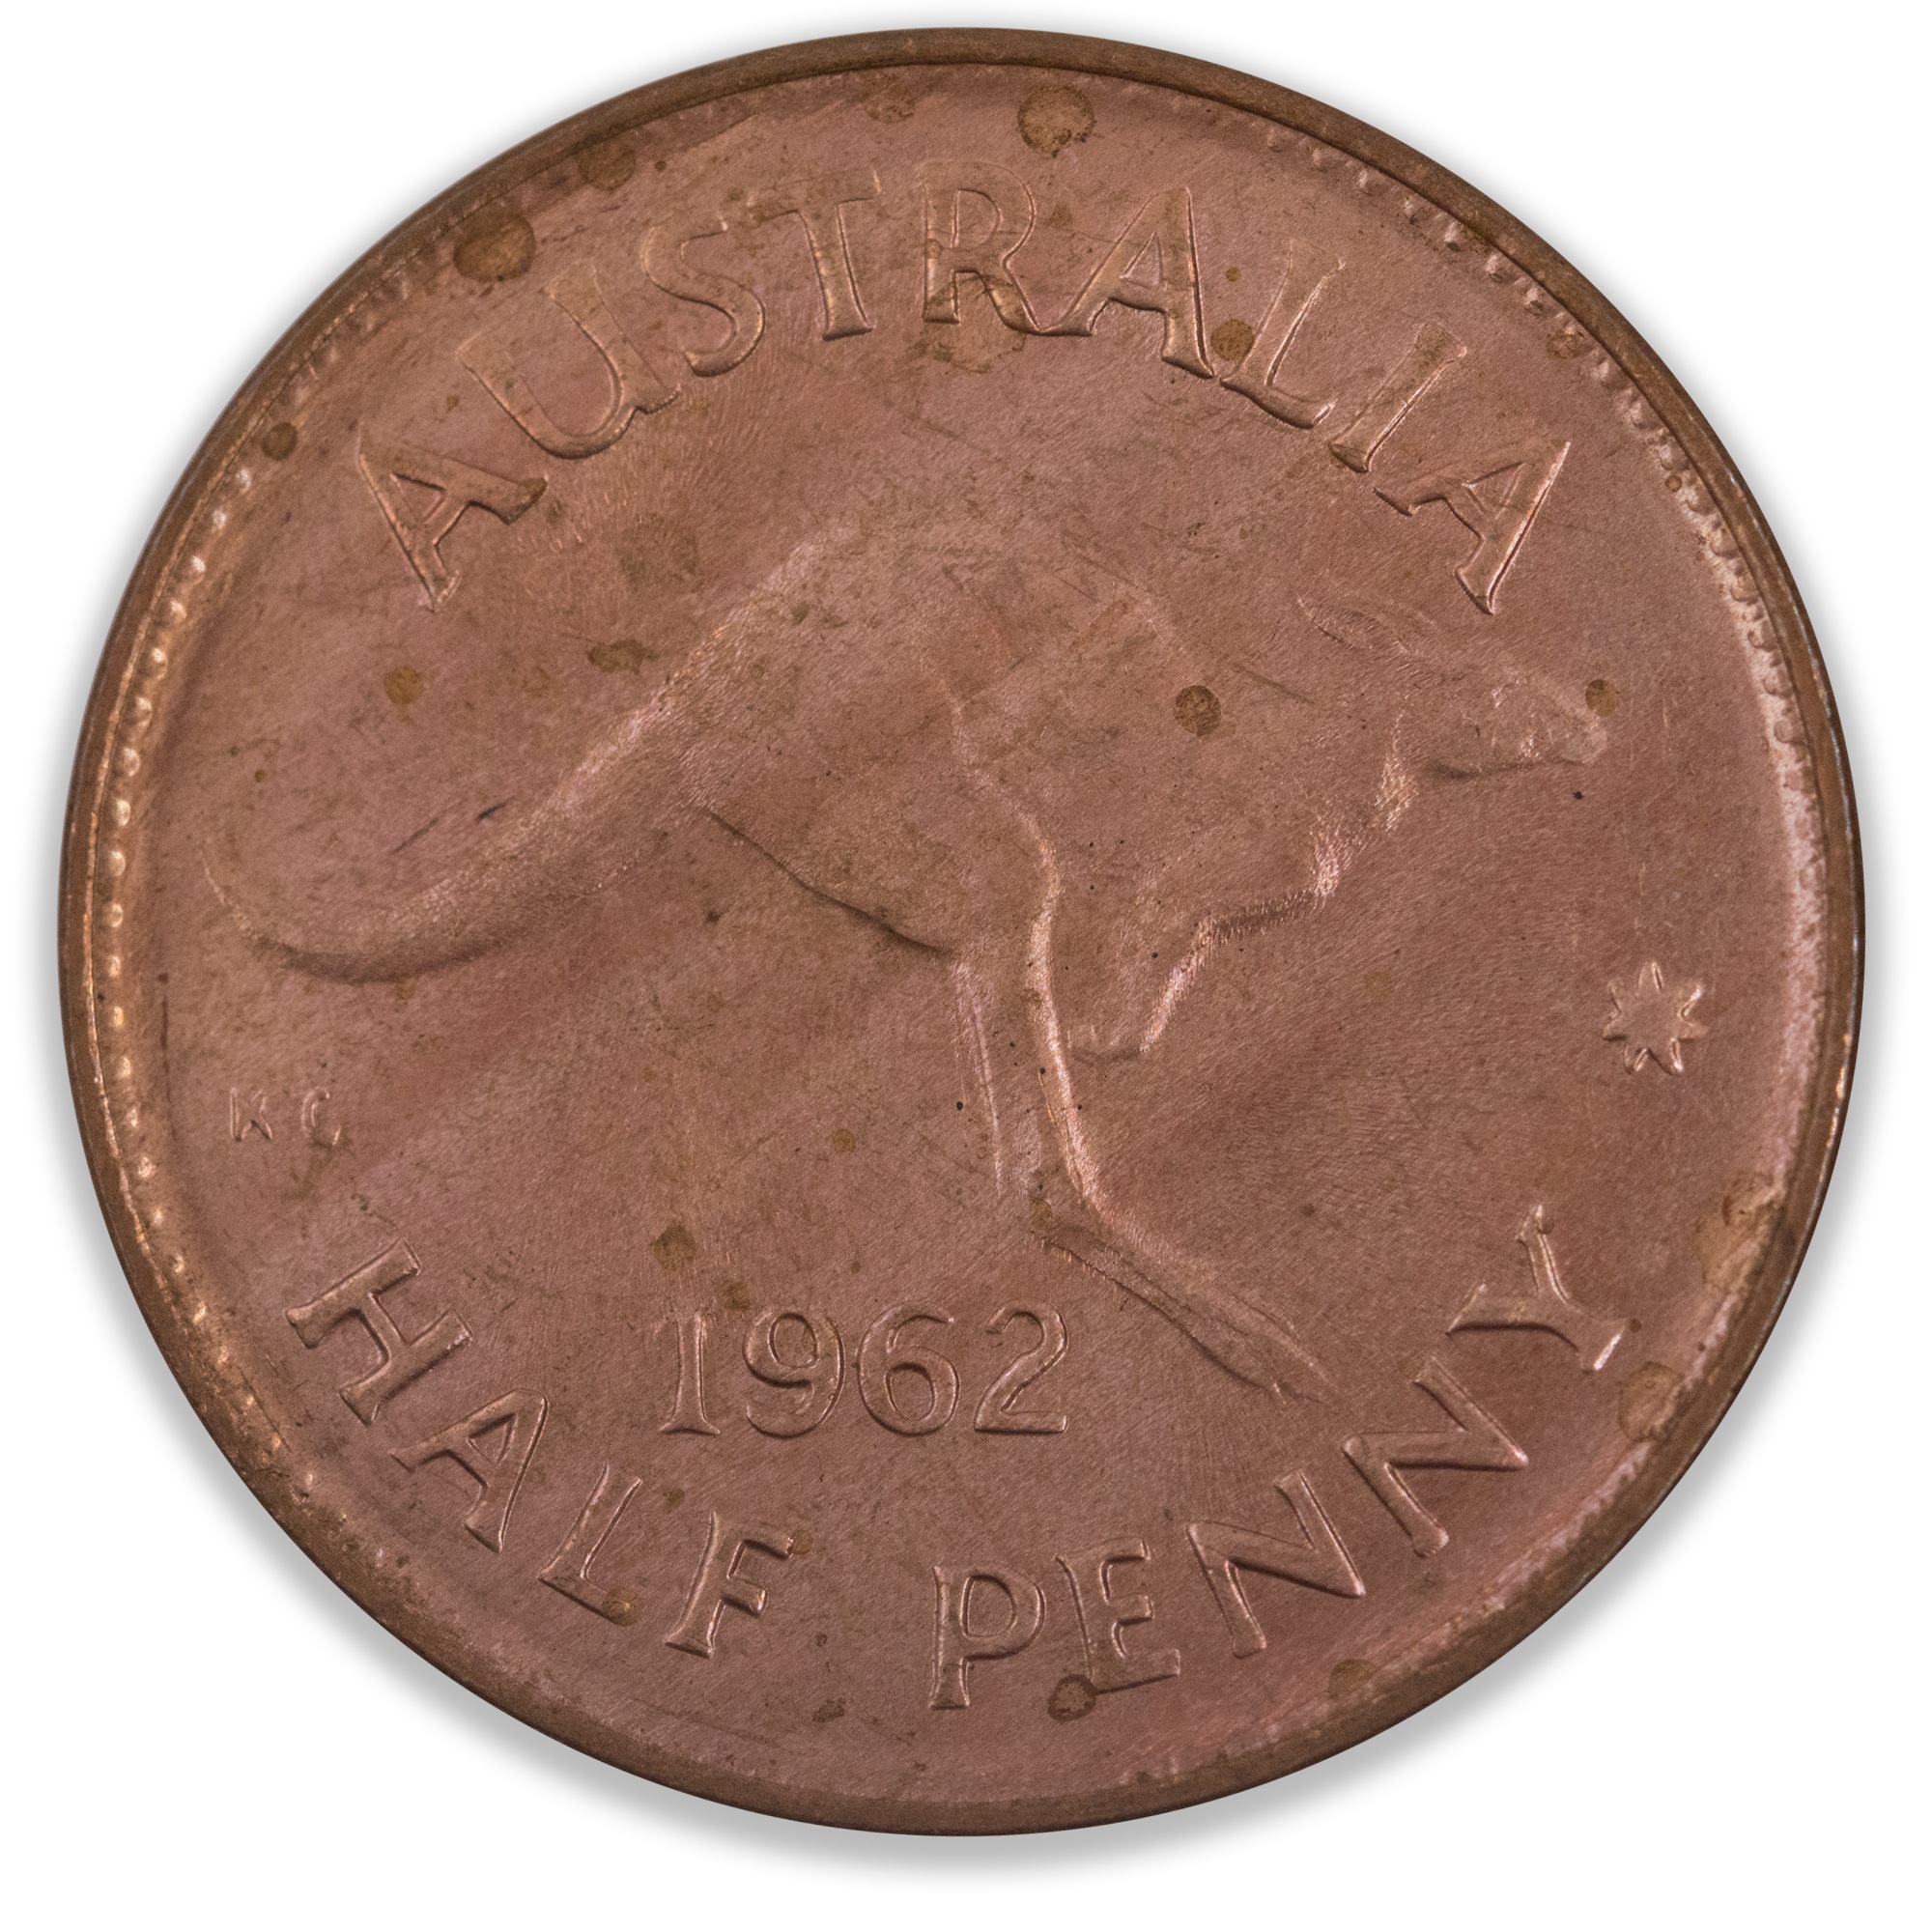 1962 Australian Half Penny Uncirculated/Chc Uncirculated